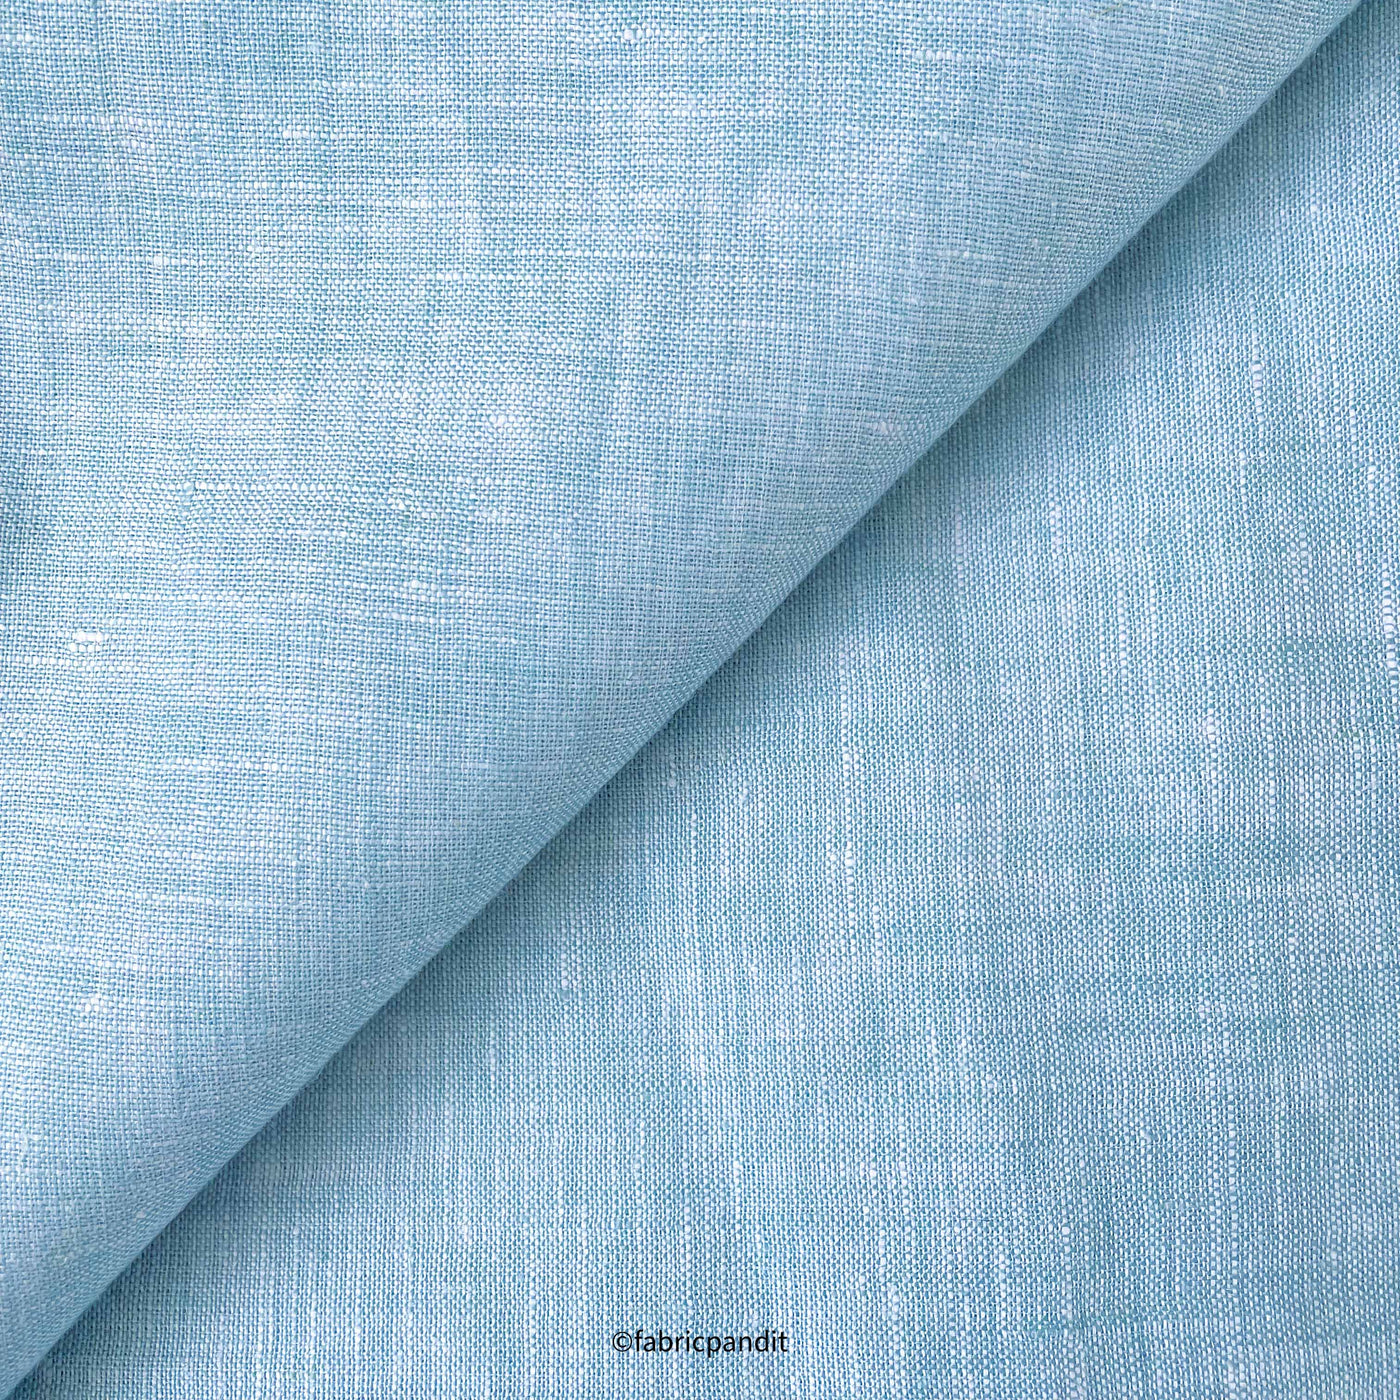 Fabric Pandit Fabric Sky Blue Premium 60 Lea Pure Linen Fabric (58 Inches)